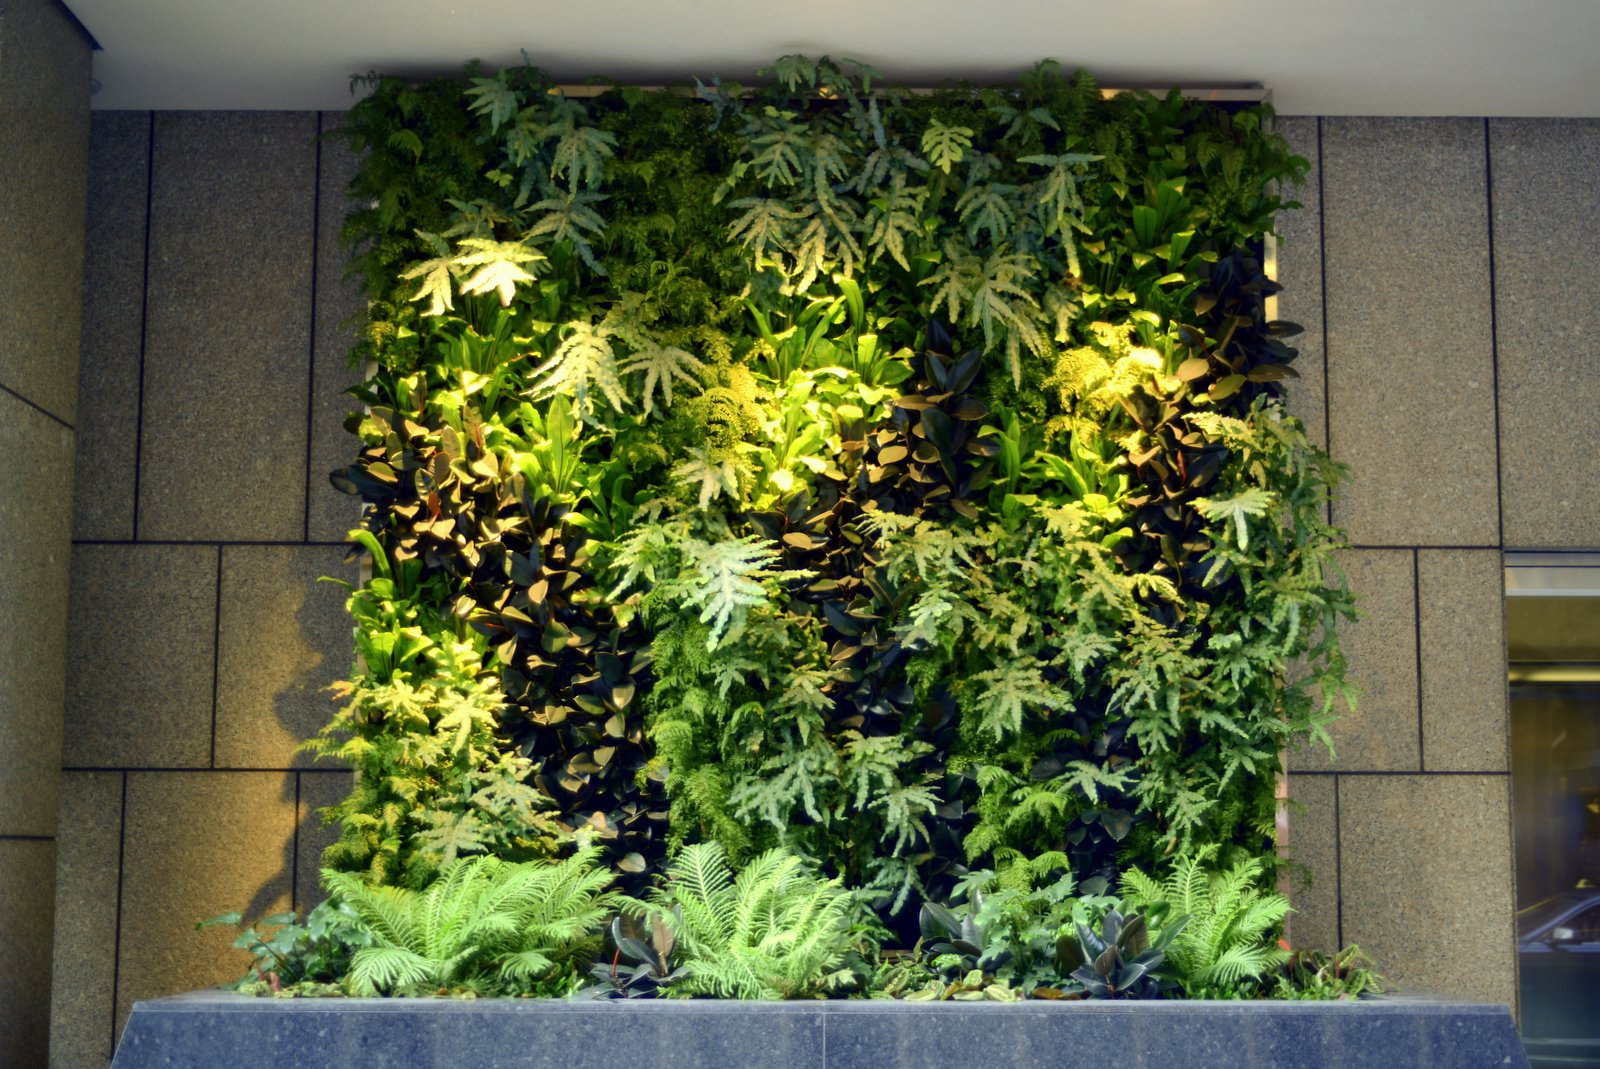 Living Green Wall